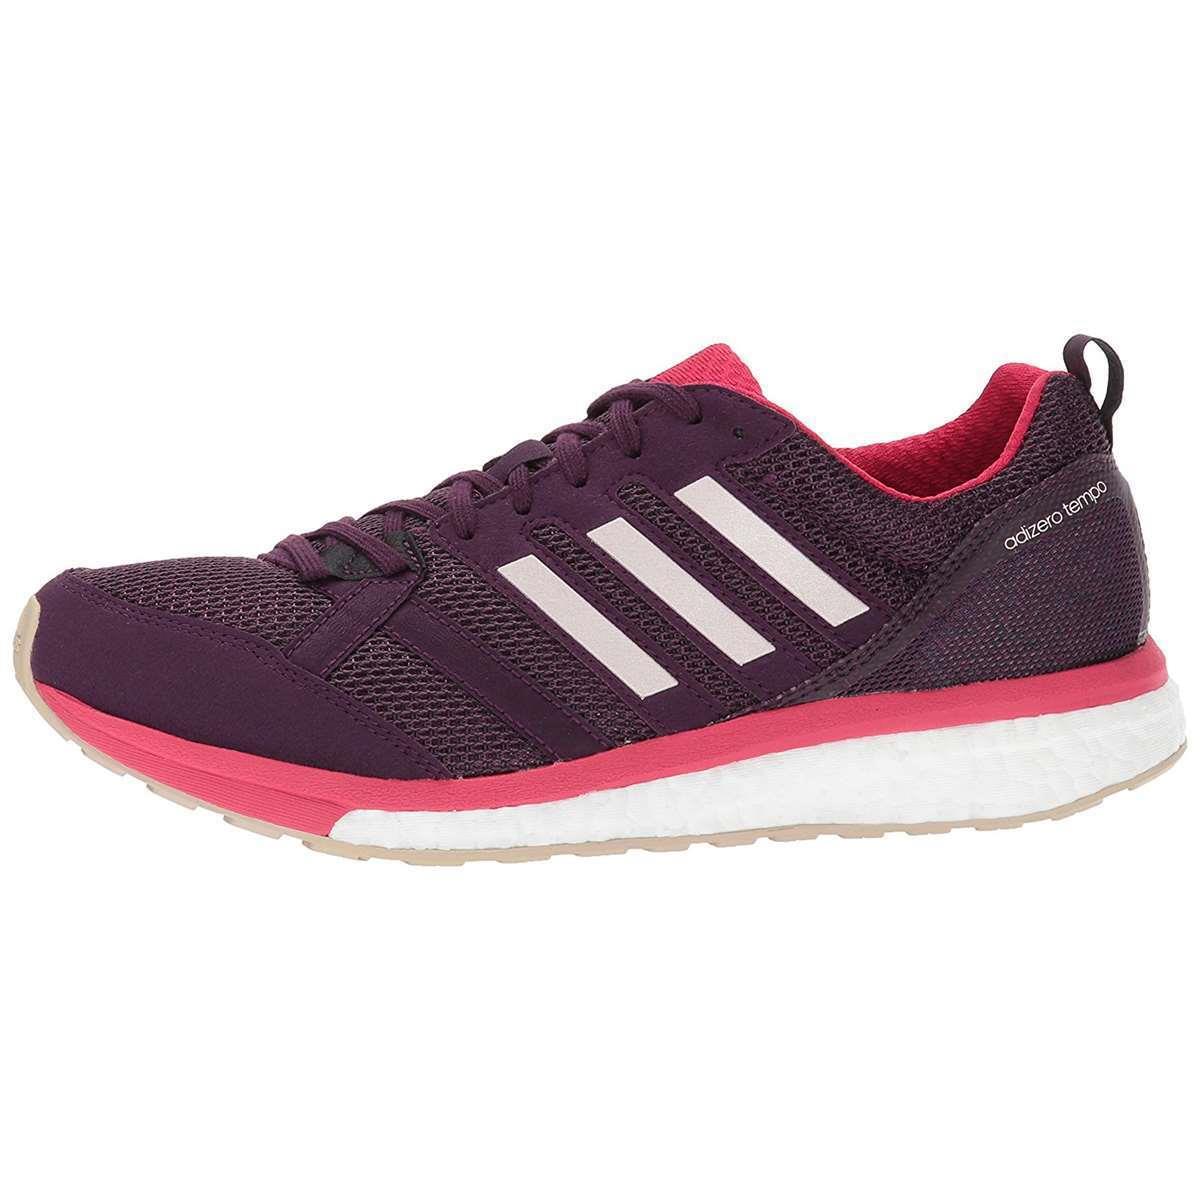 Adidas Women Adizero Tempo 9 Running Training Shoes Sneakers